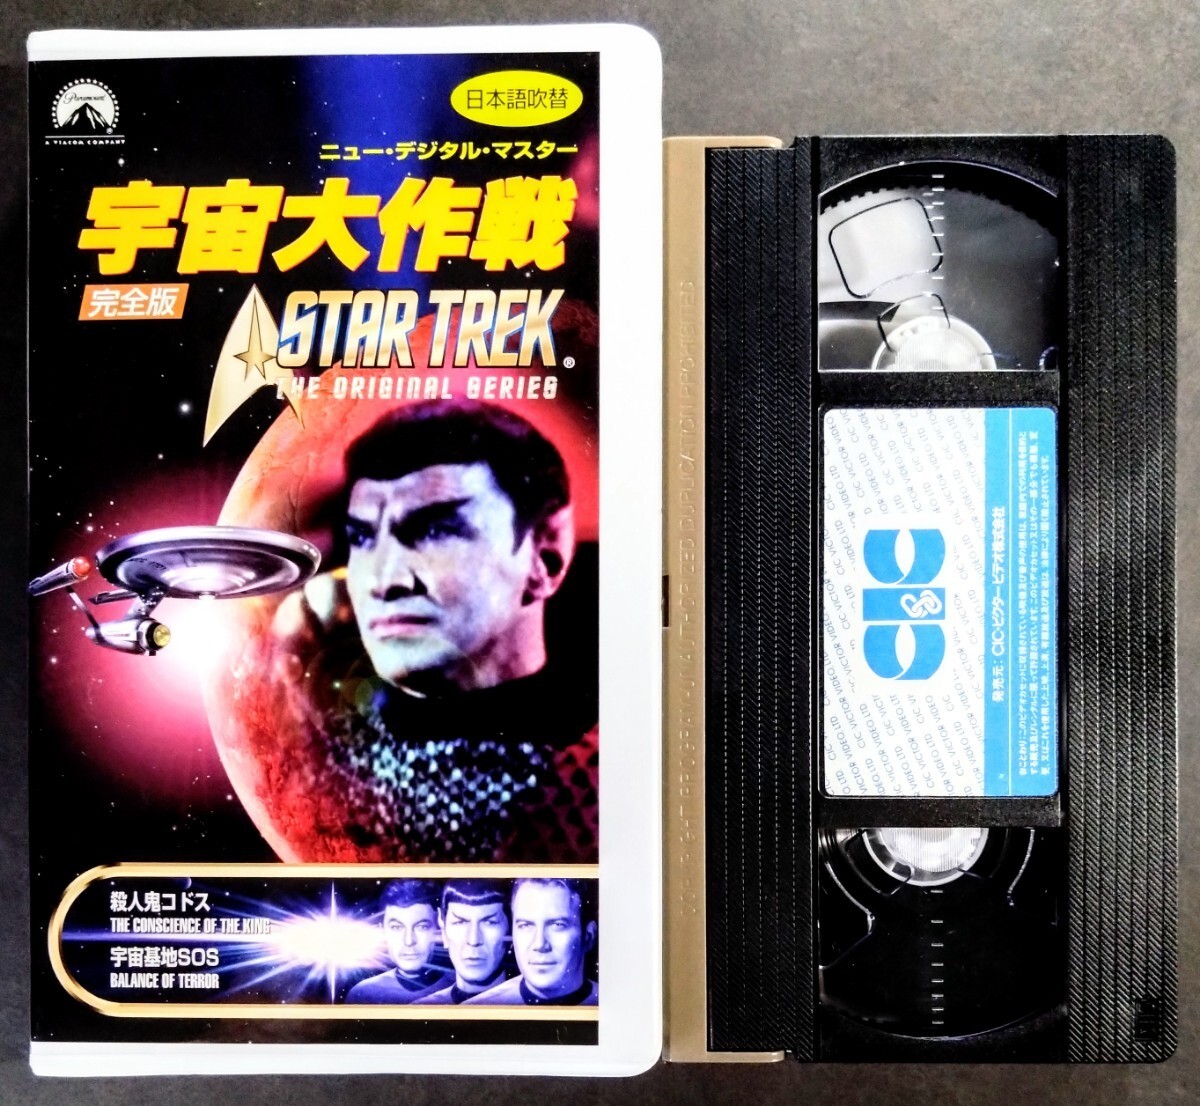  beautiful goods VHS[ cosmos Daisaku war /. person .kodos* cosmos basis ground SOS] new digital master (102 minute ).... William * Shatner.1969 year telecast ( Japanese blow change )